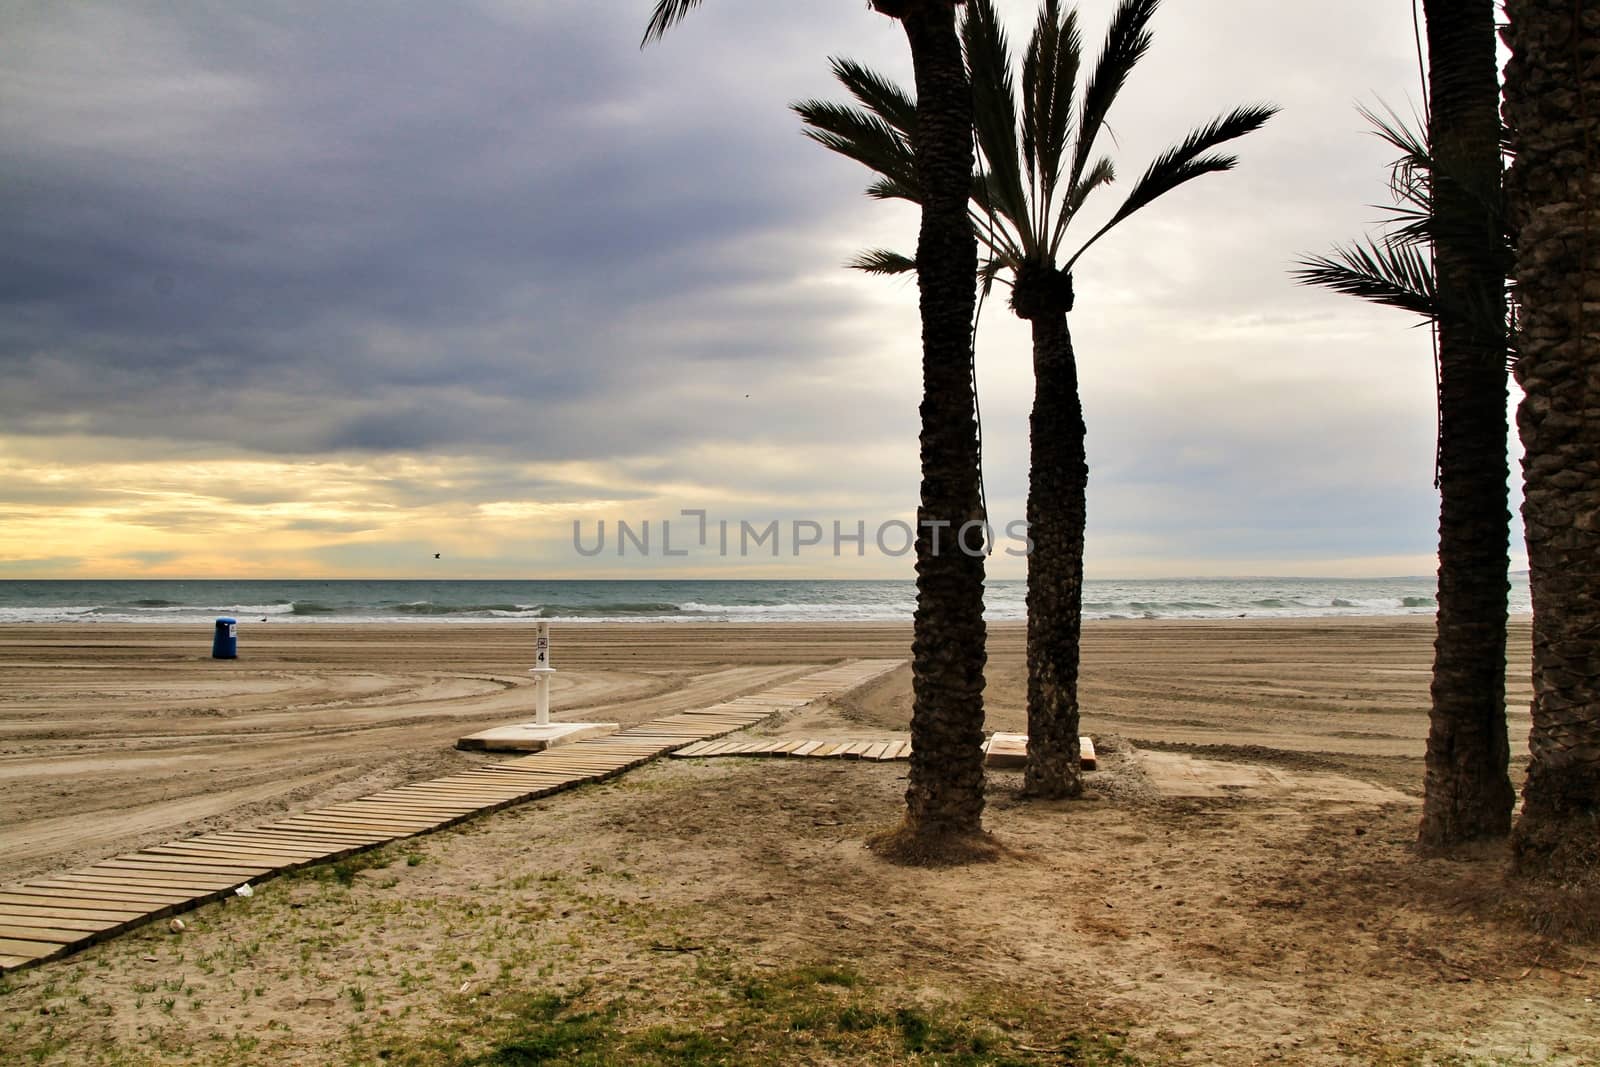 Beach under stormy sky by soniabonet